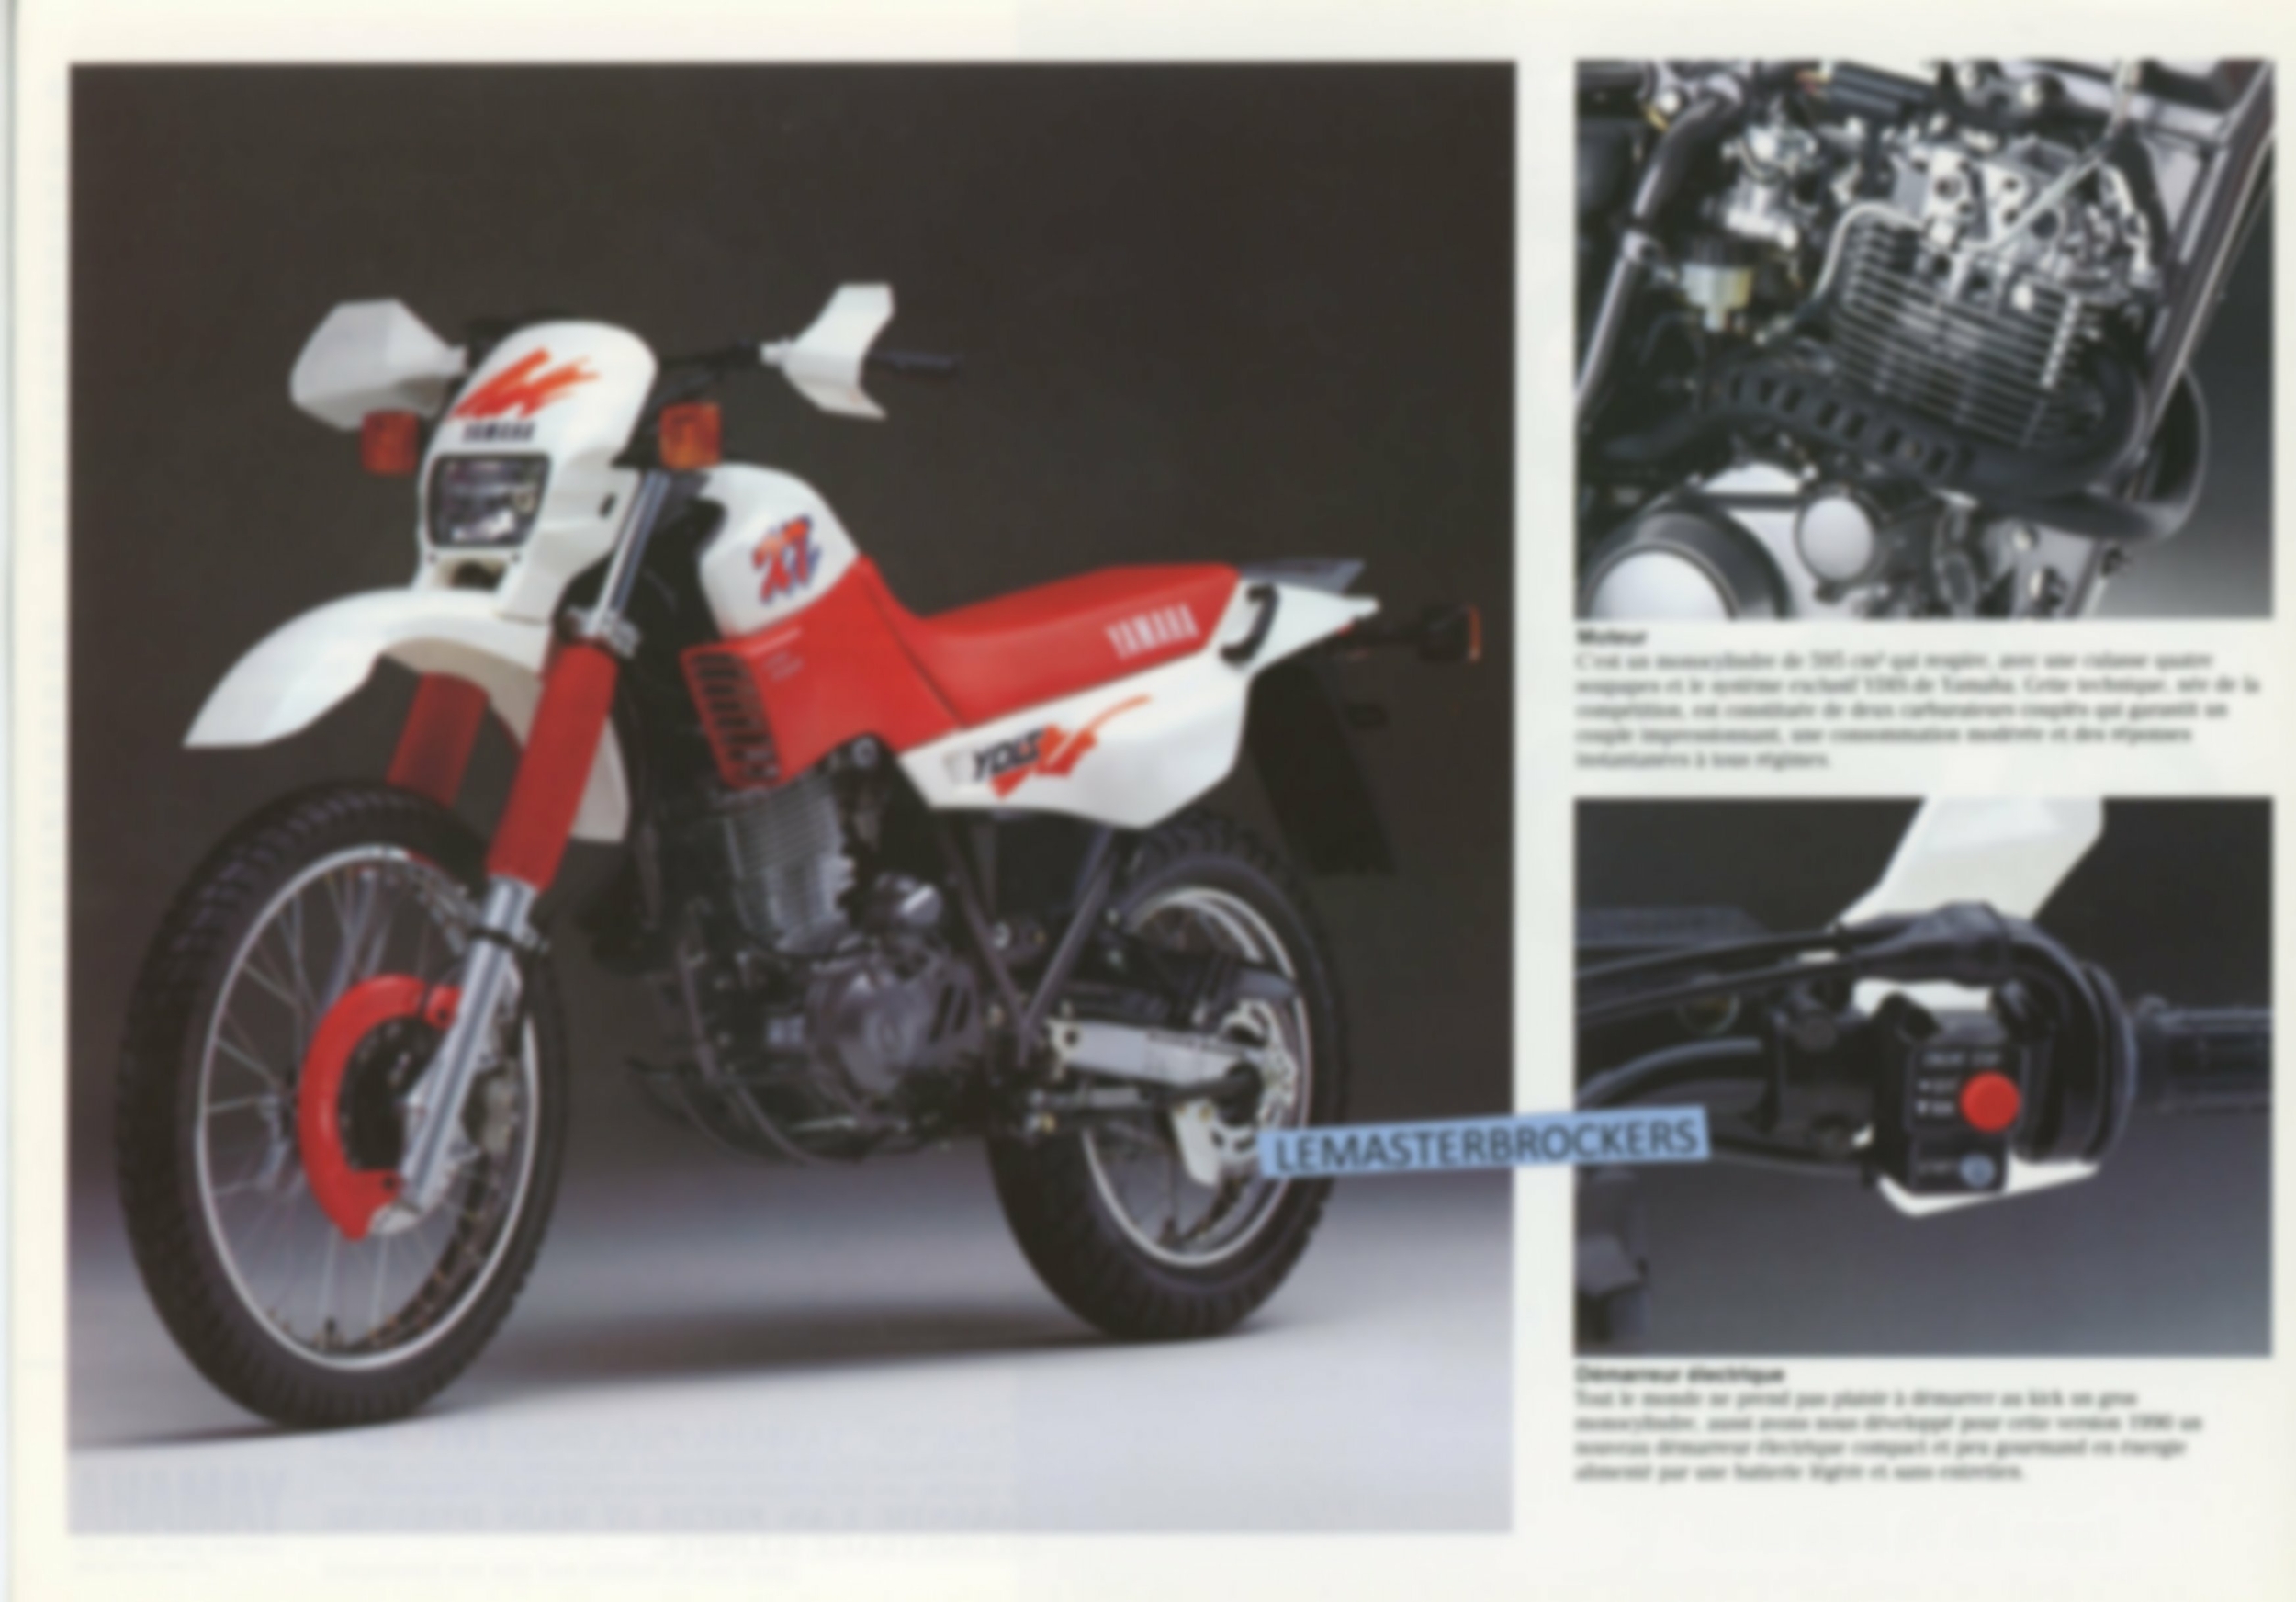 YAMAHA-XT600-BROCHURE-MOTO-XT-600E-600-1990-LEMASTERBROCKERS